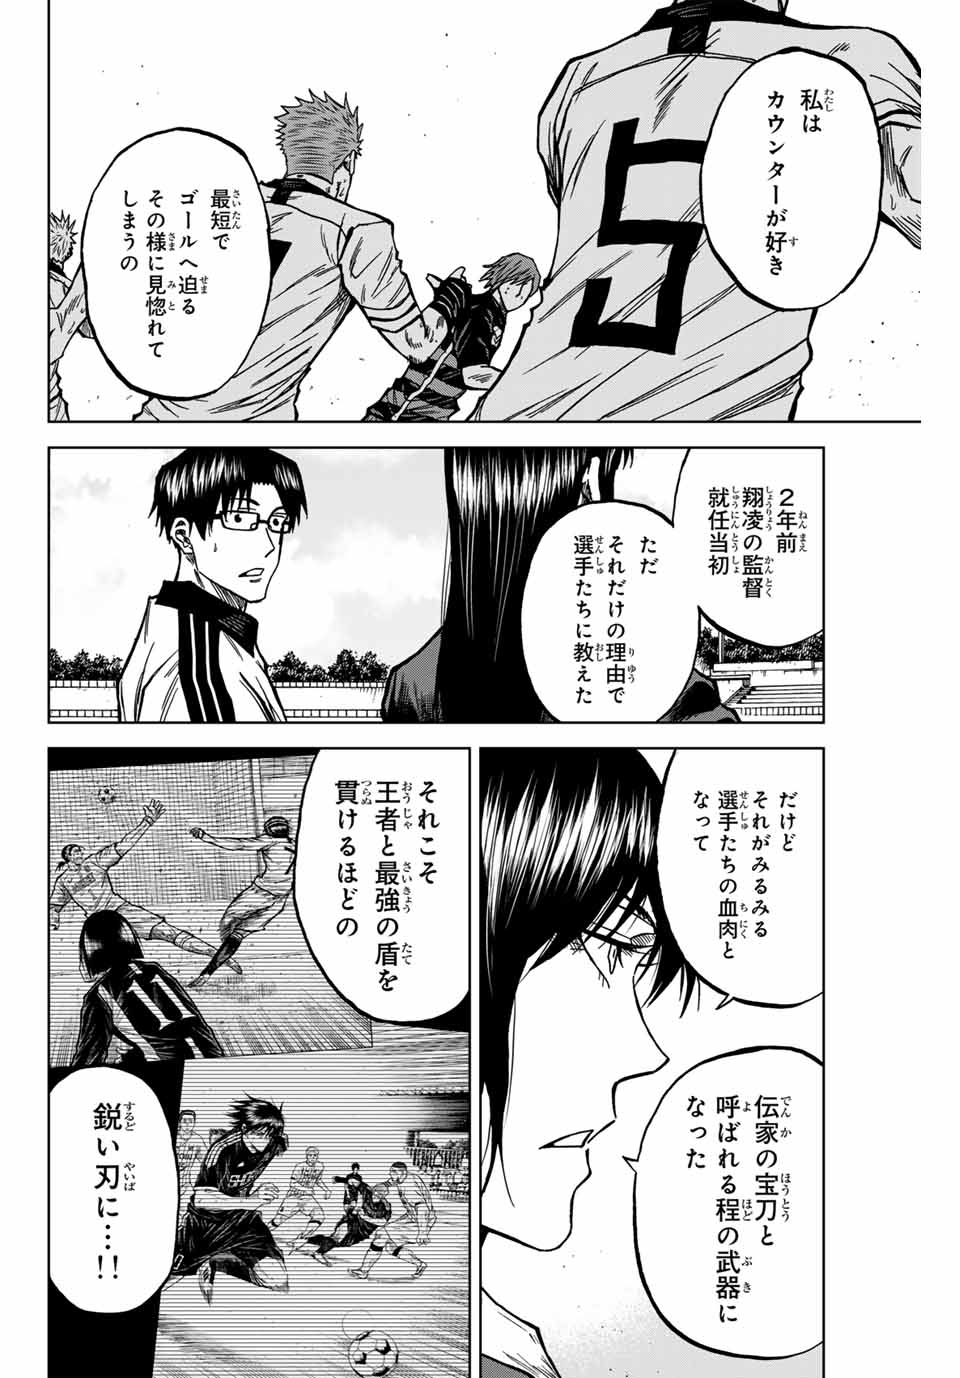 Aoku Somero - Chapter 125 - Page 4